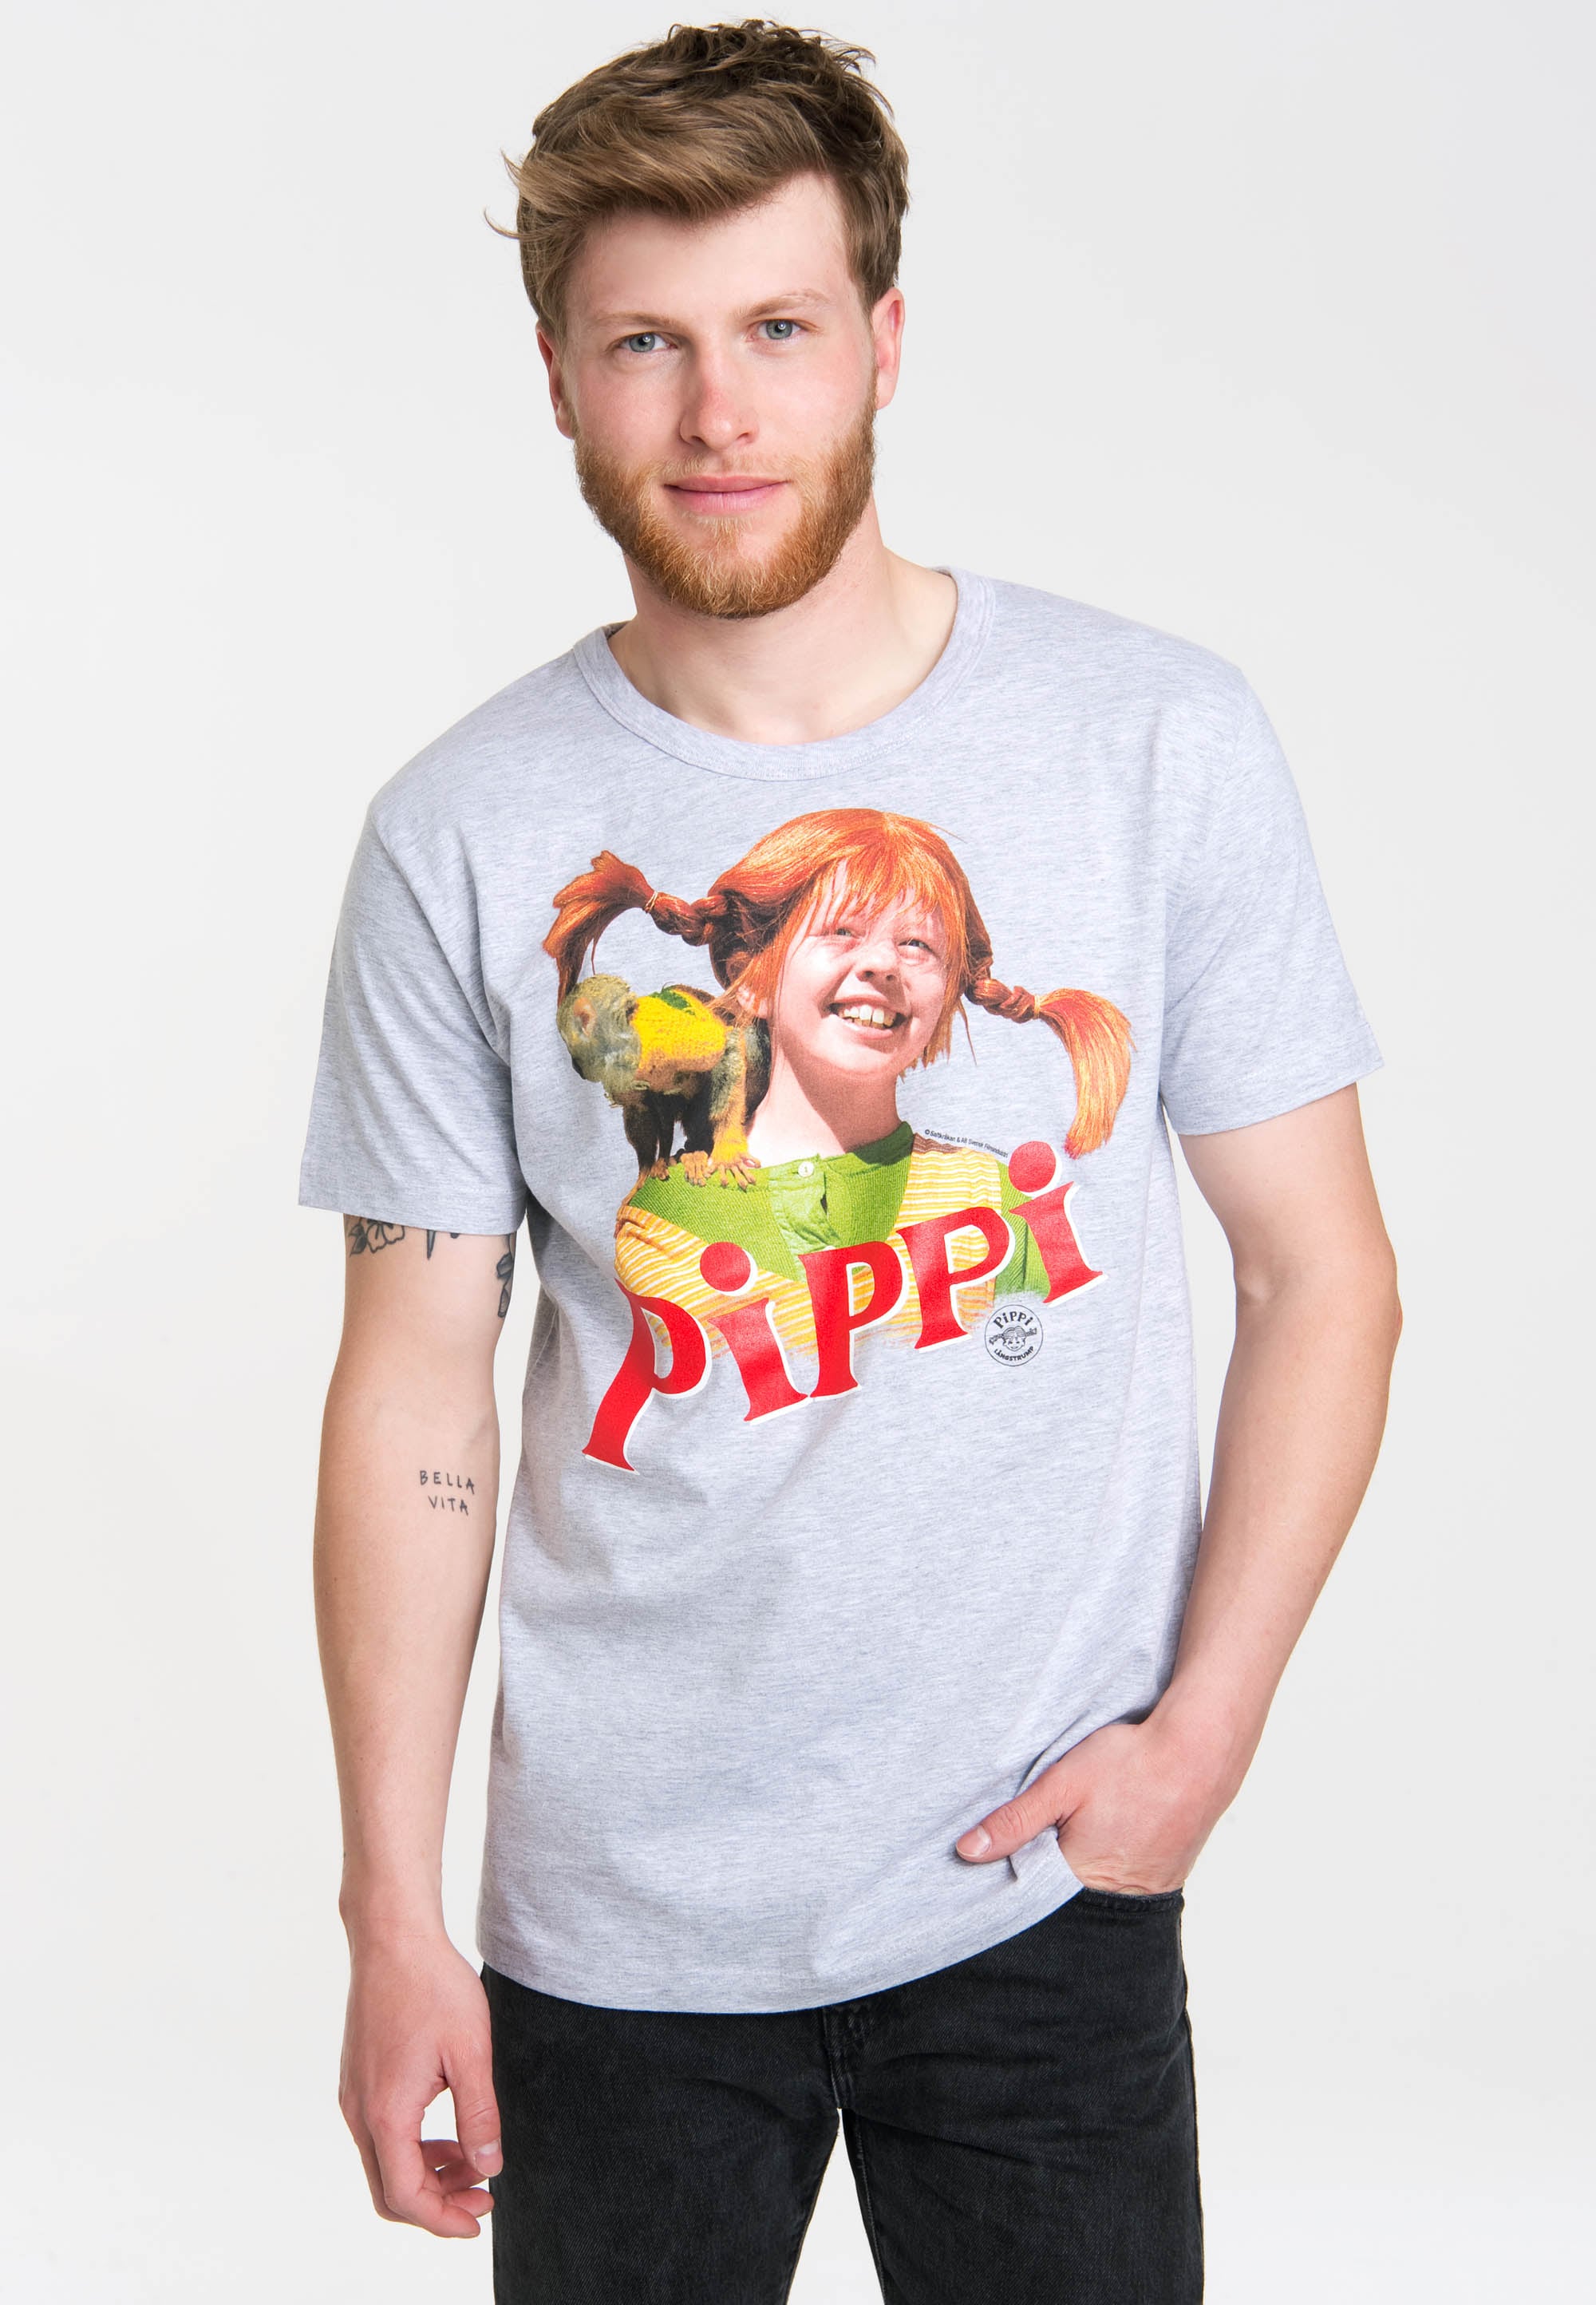 T-Shirt »Pippi Langstrumpf - Äffchen Herr Nilsson«, mit coolem Frontprint